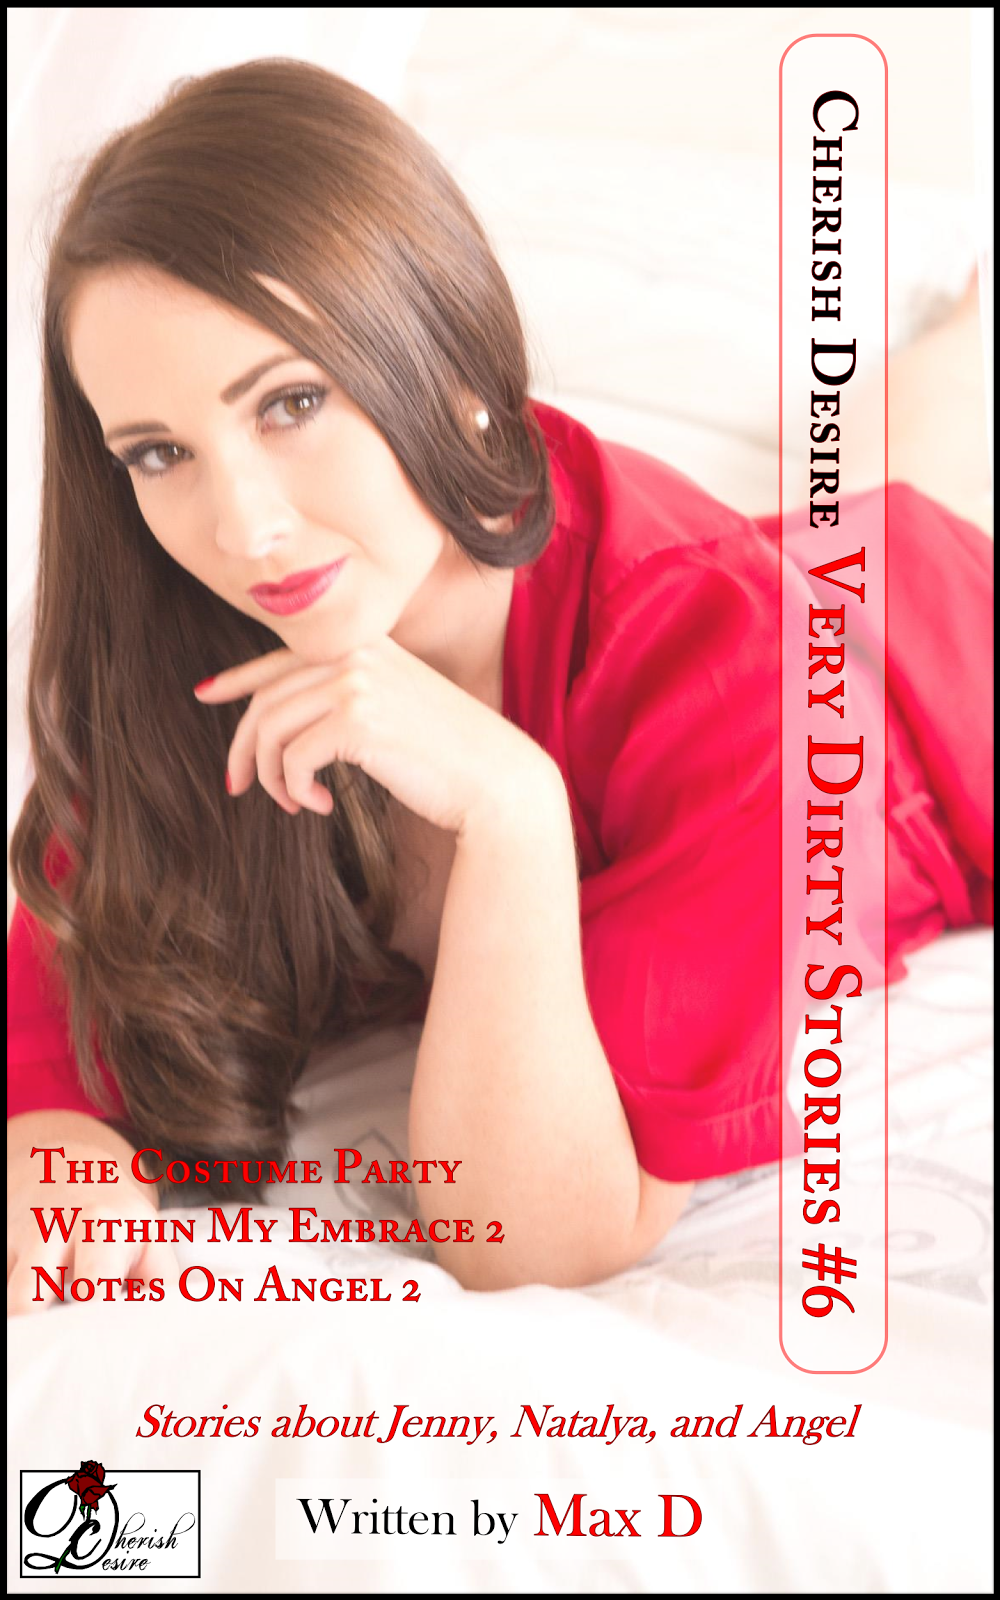 Cherish Desire: Very Dirty Stories #6, Max D, erotica